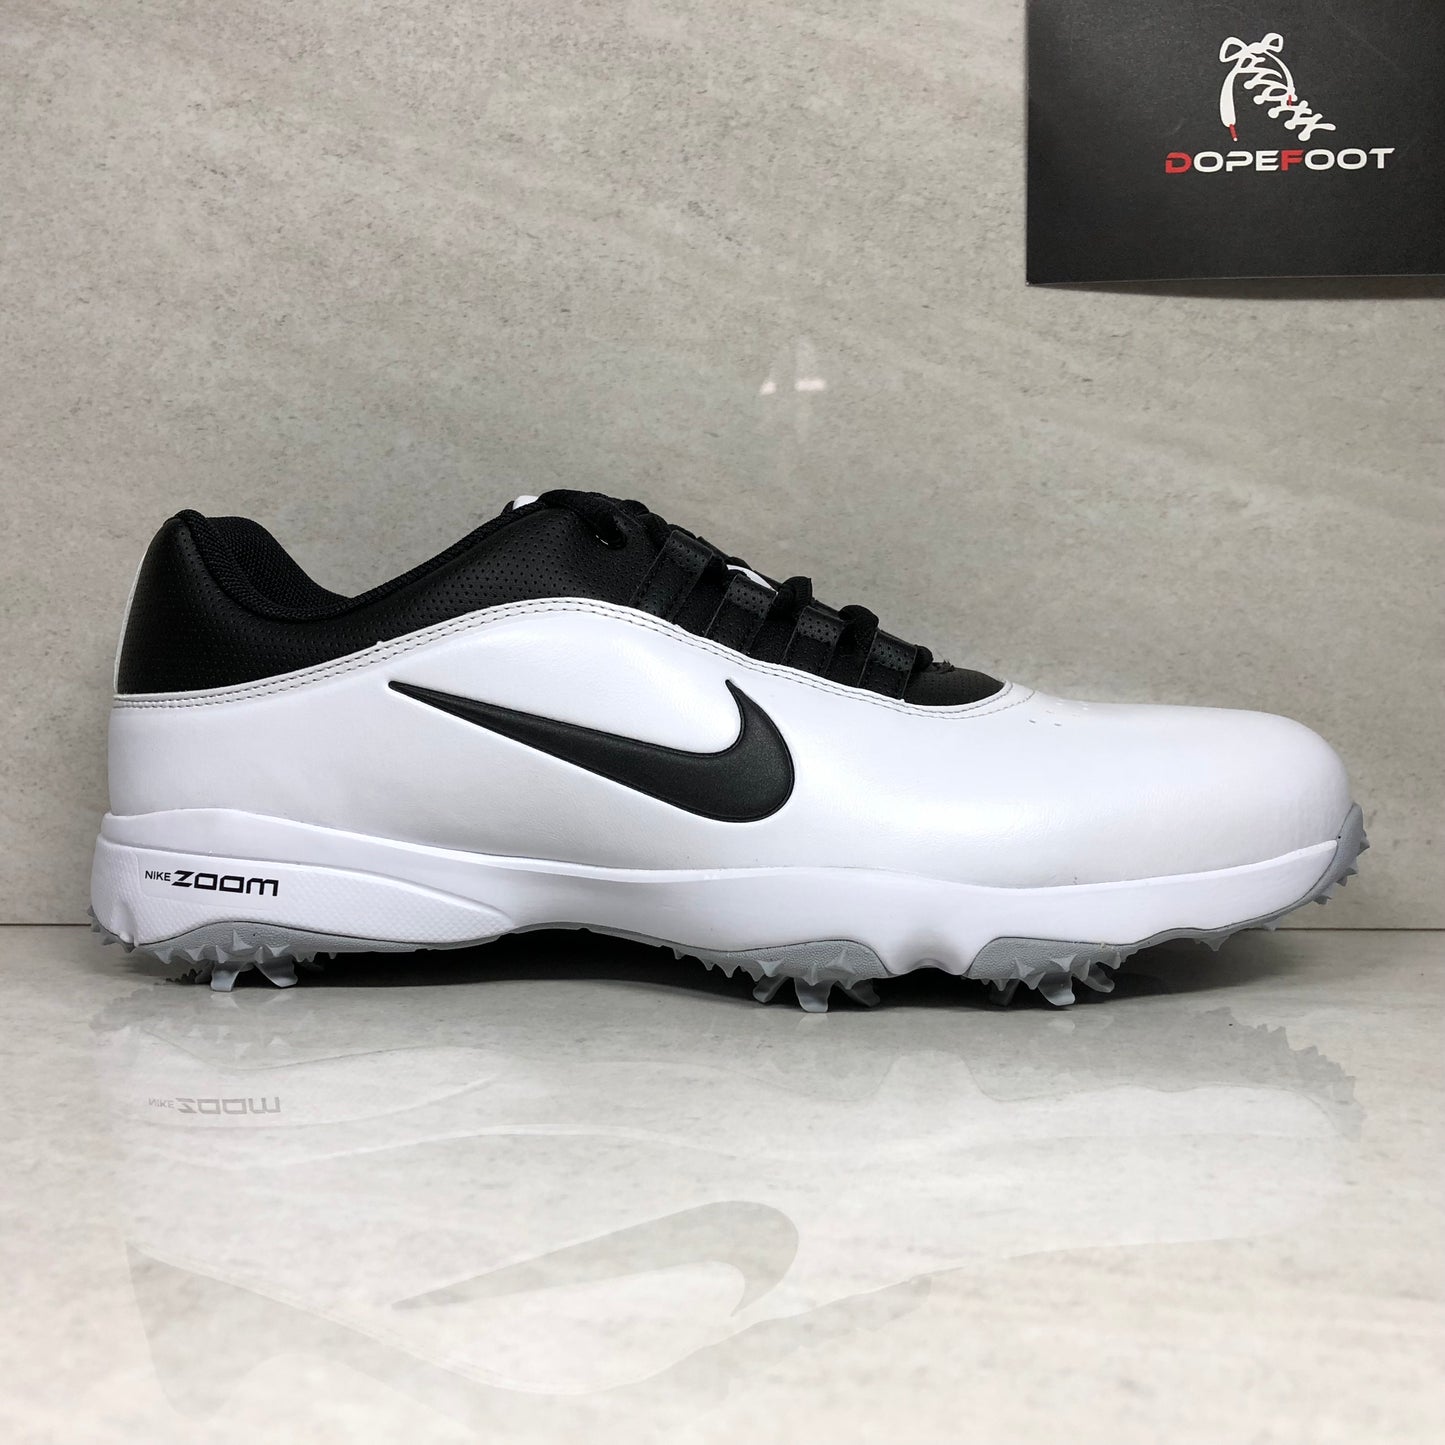 Nike Air Zoom Rival Golf Zapatos Tamaño 14 Blanco/Negro 878957 100